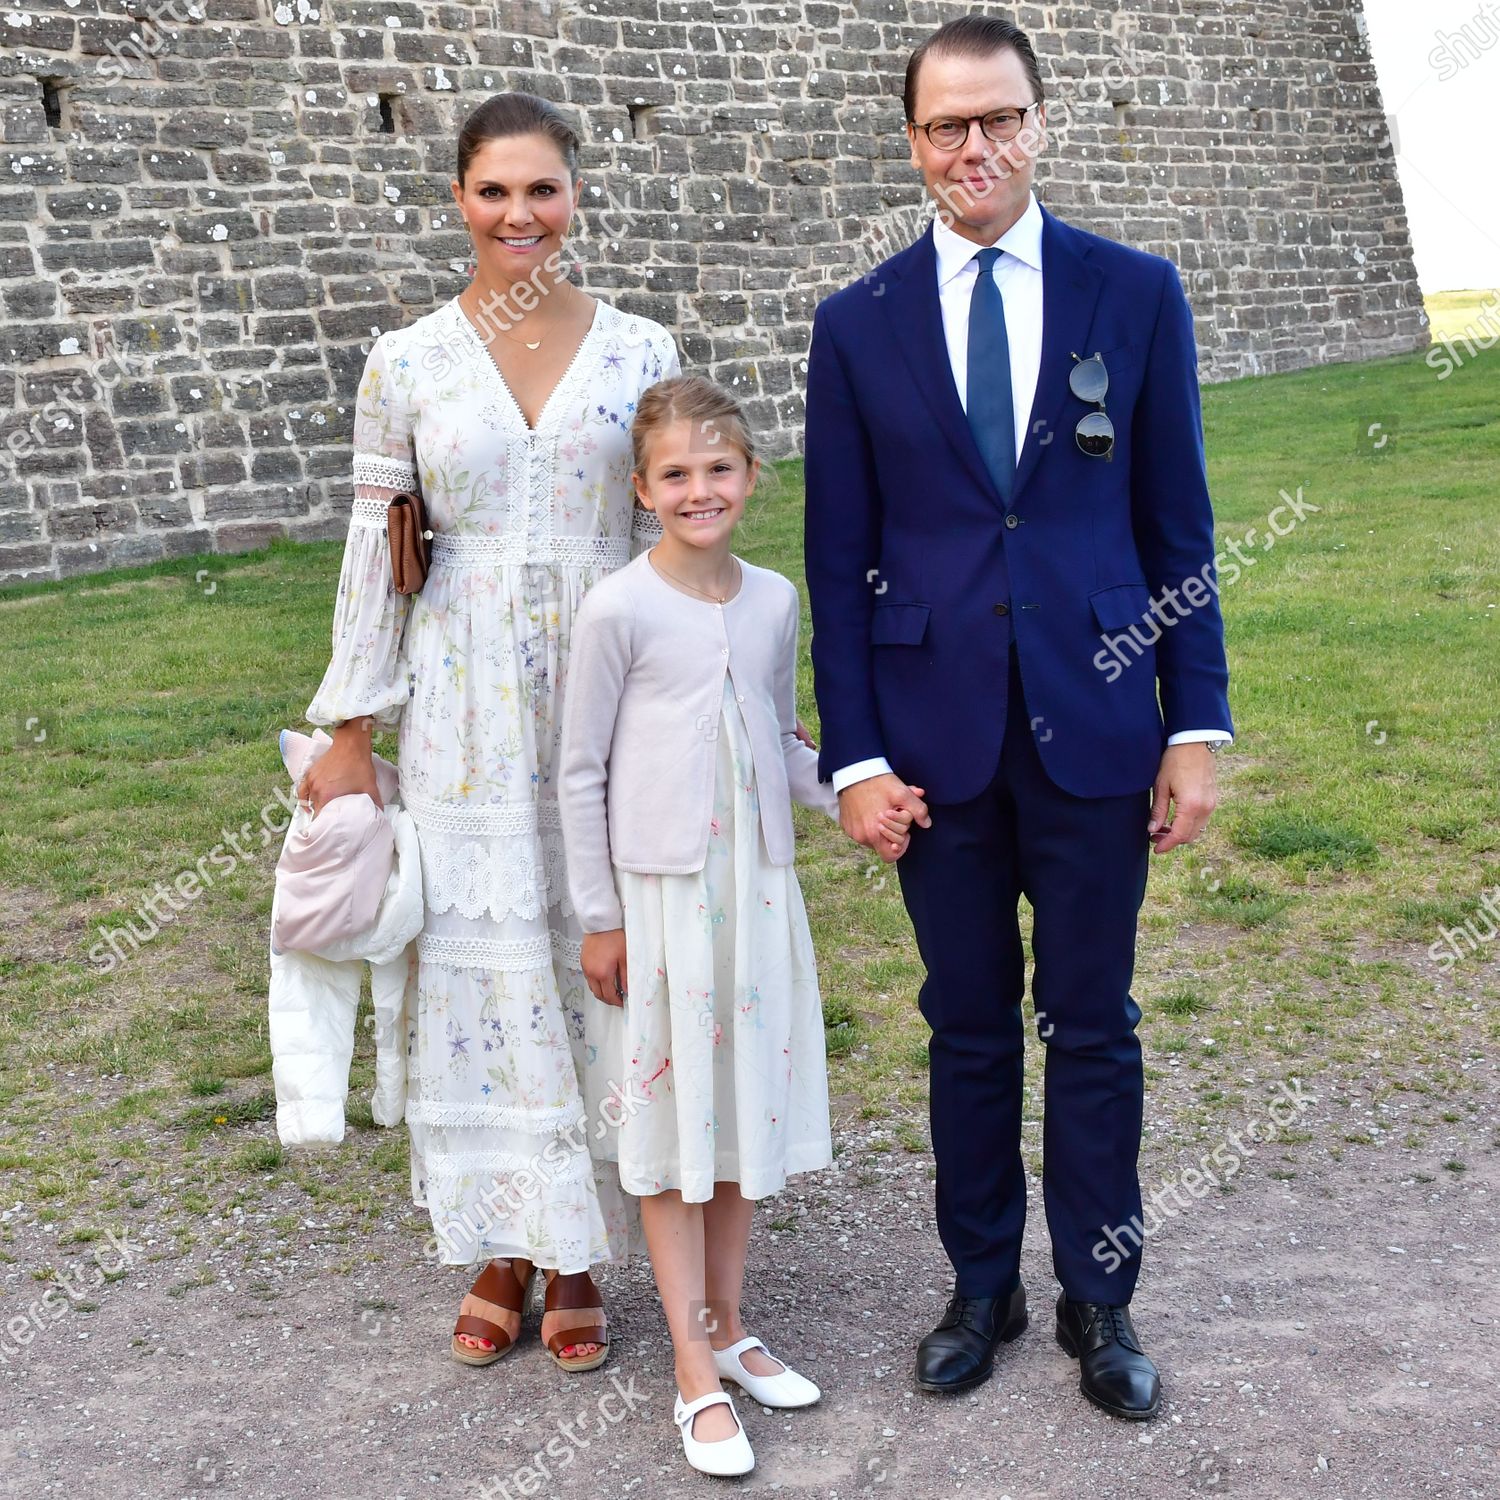 victoria-crown-princess-of-sweden-birthday-celebrations-solliden-palace-borgholm-sweden-shutterstock-editorial-10711483ae.jpg